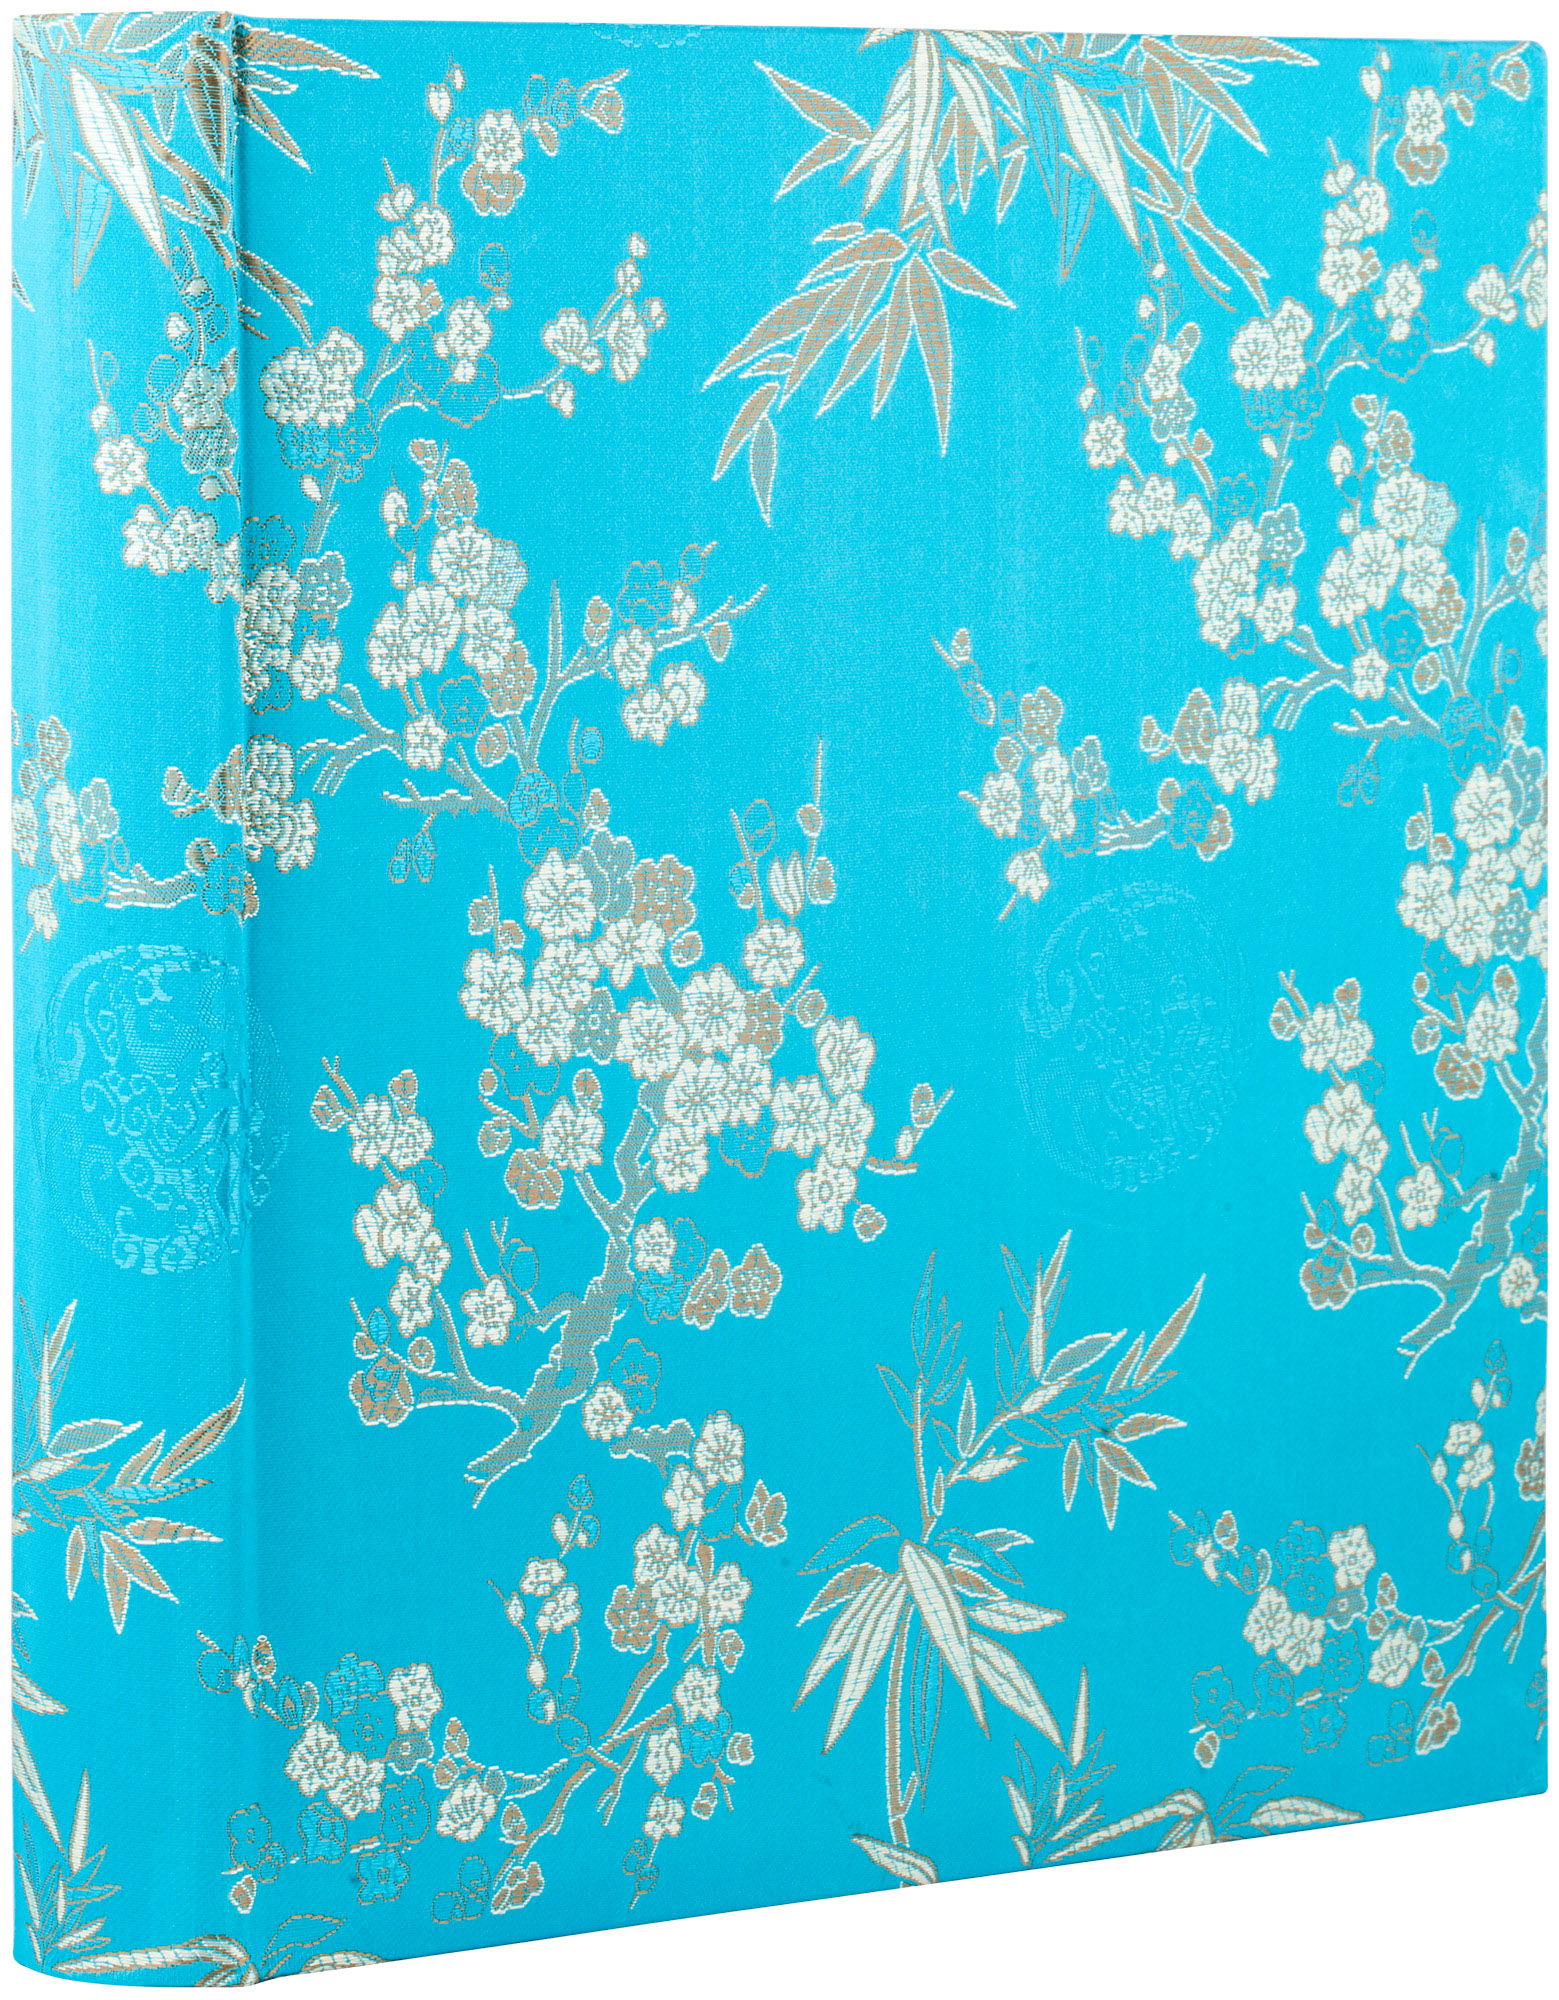 Silk blossom. Голубой кармашек. Фотоальбом Innova Linen. Q5864 FLOWERPAD Blue. Маленькие наклейки шелковые голубые.